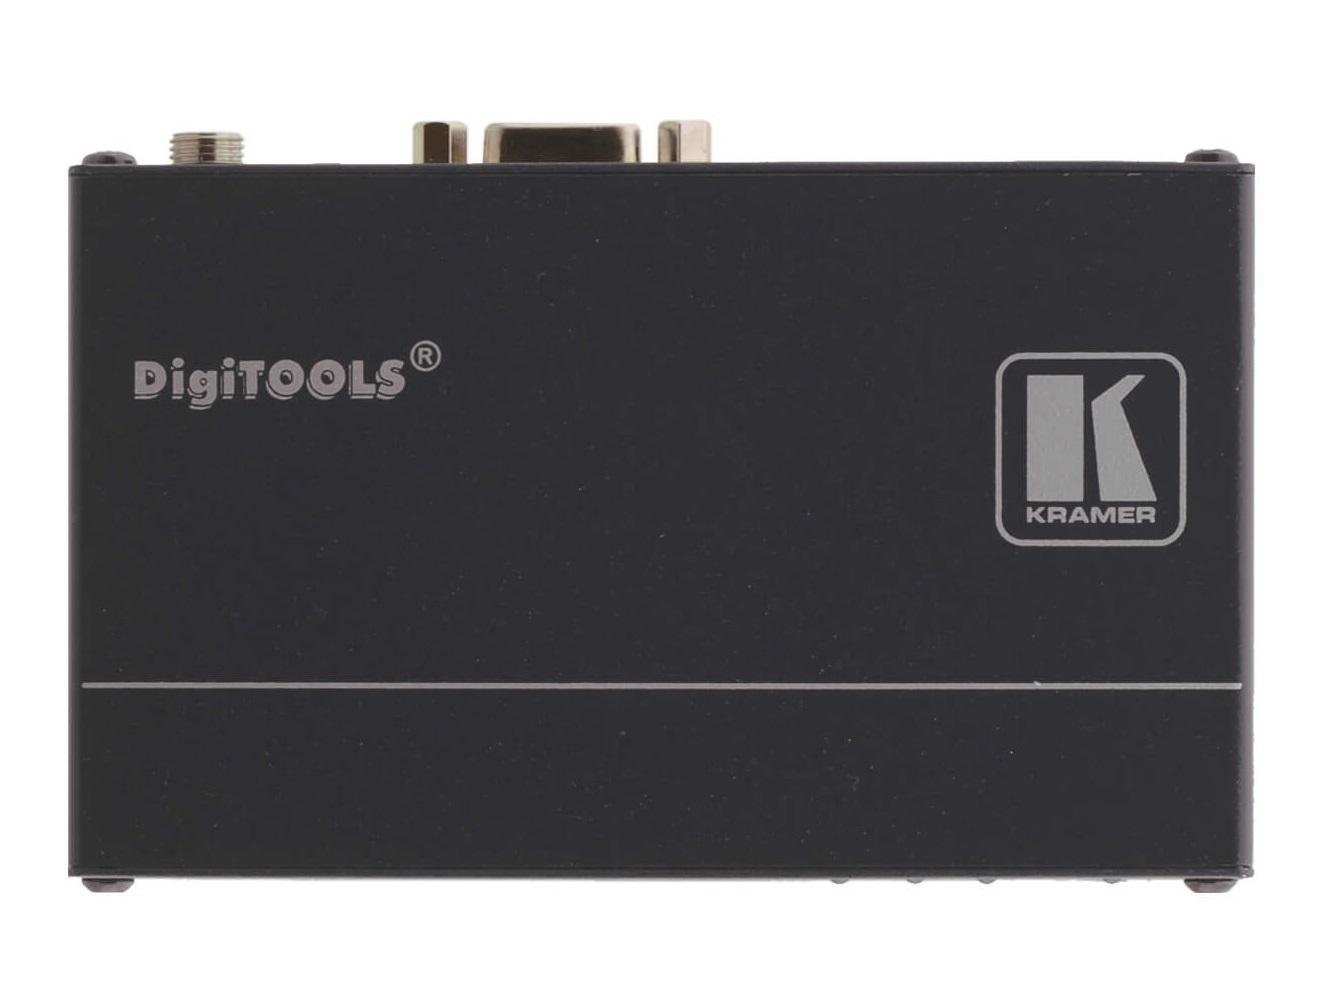 Kramer TP-580T 4K/60 4x2x0 HDMI HDCP 2.2 Transmitter with RS-232/IR over Long-Reach HDBaseT